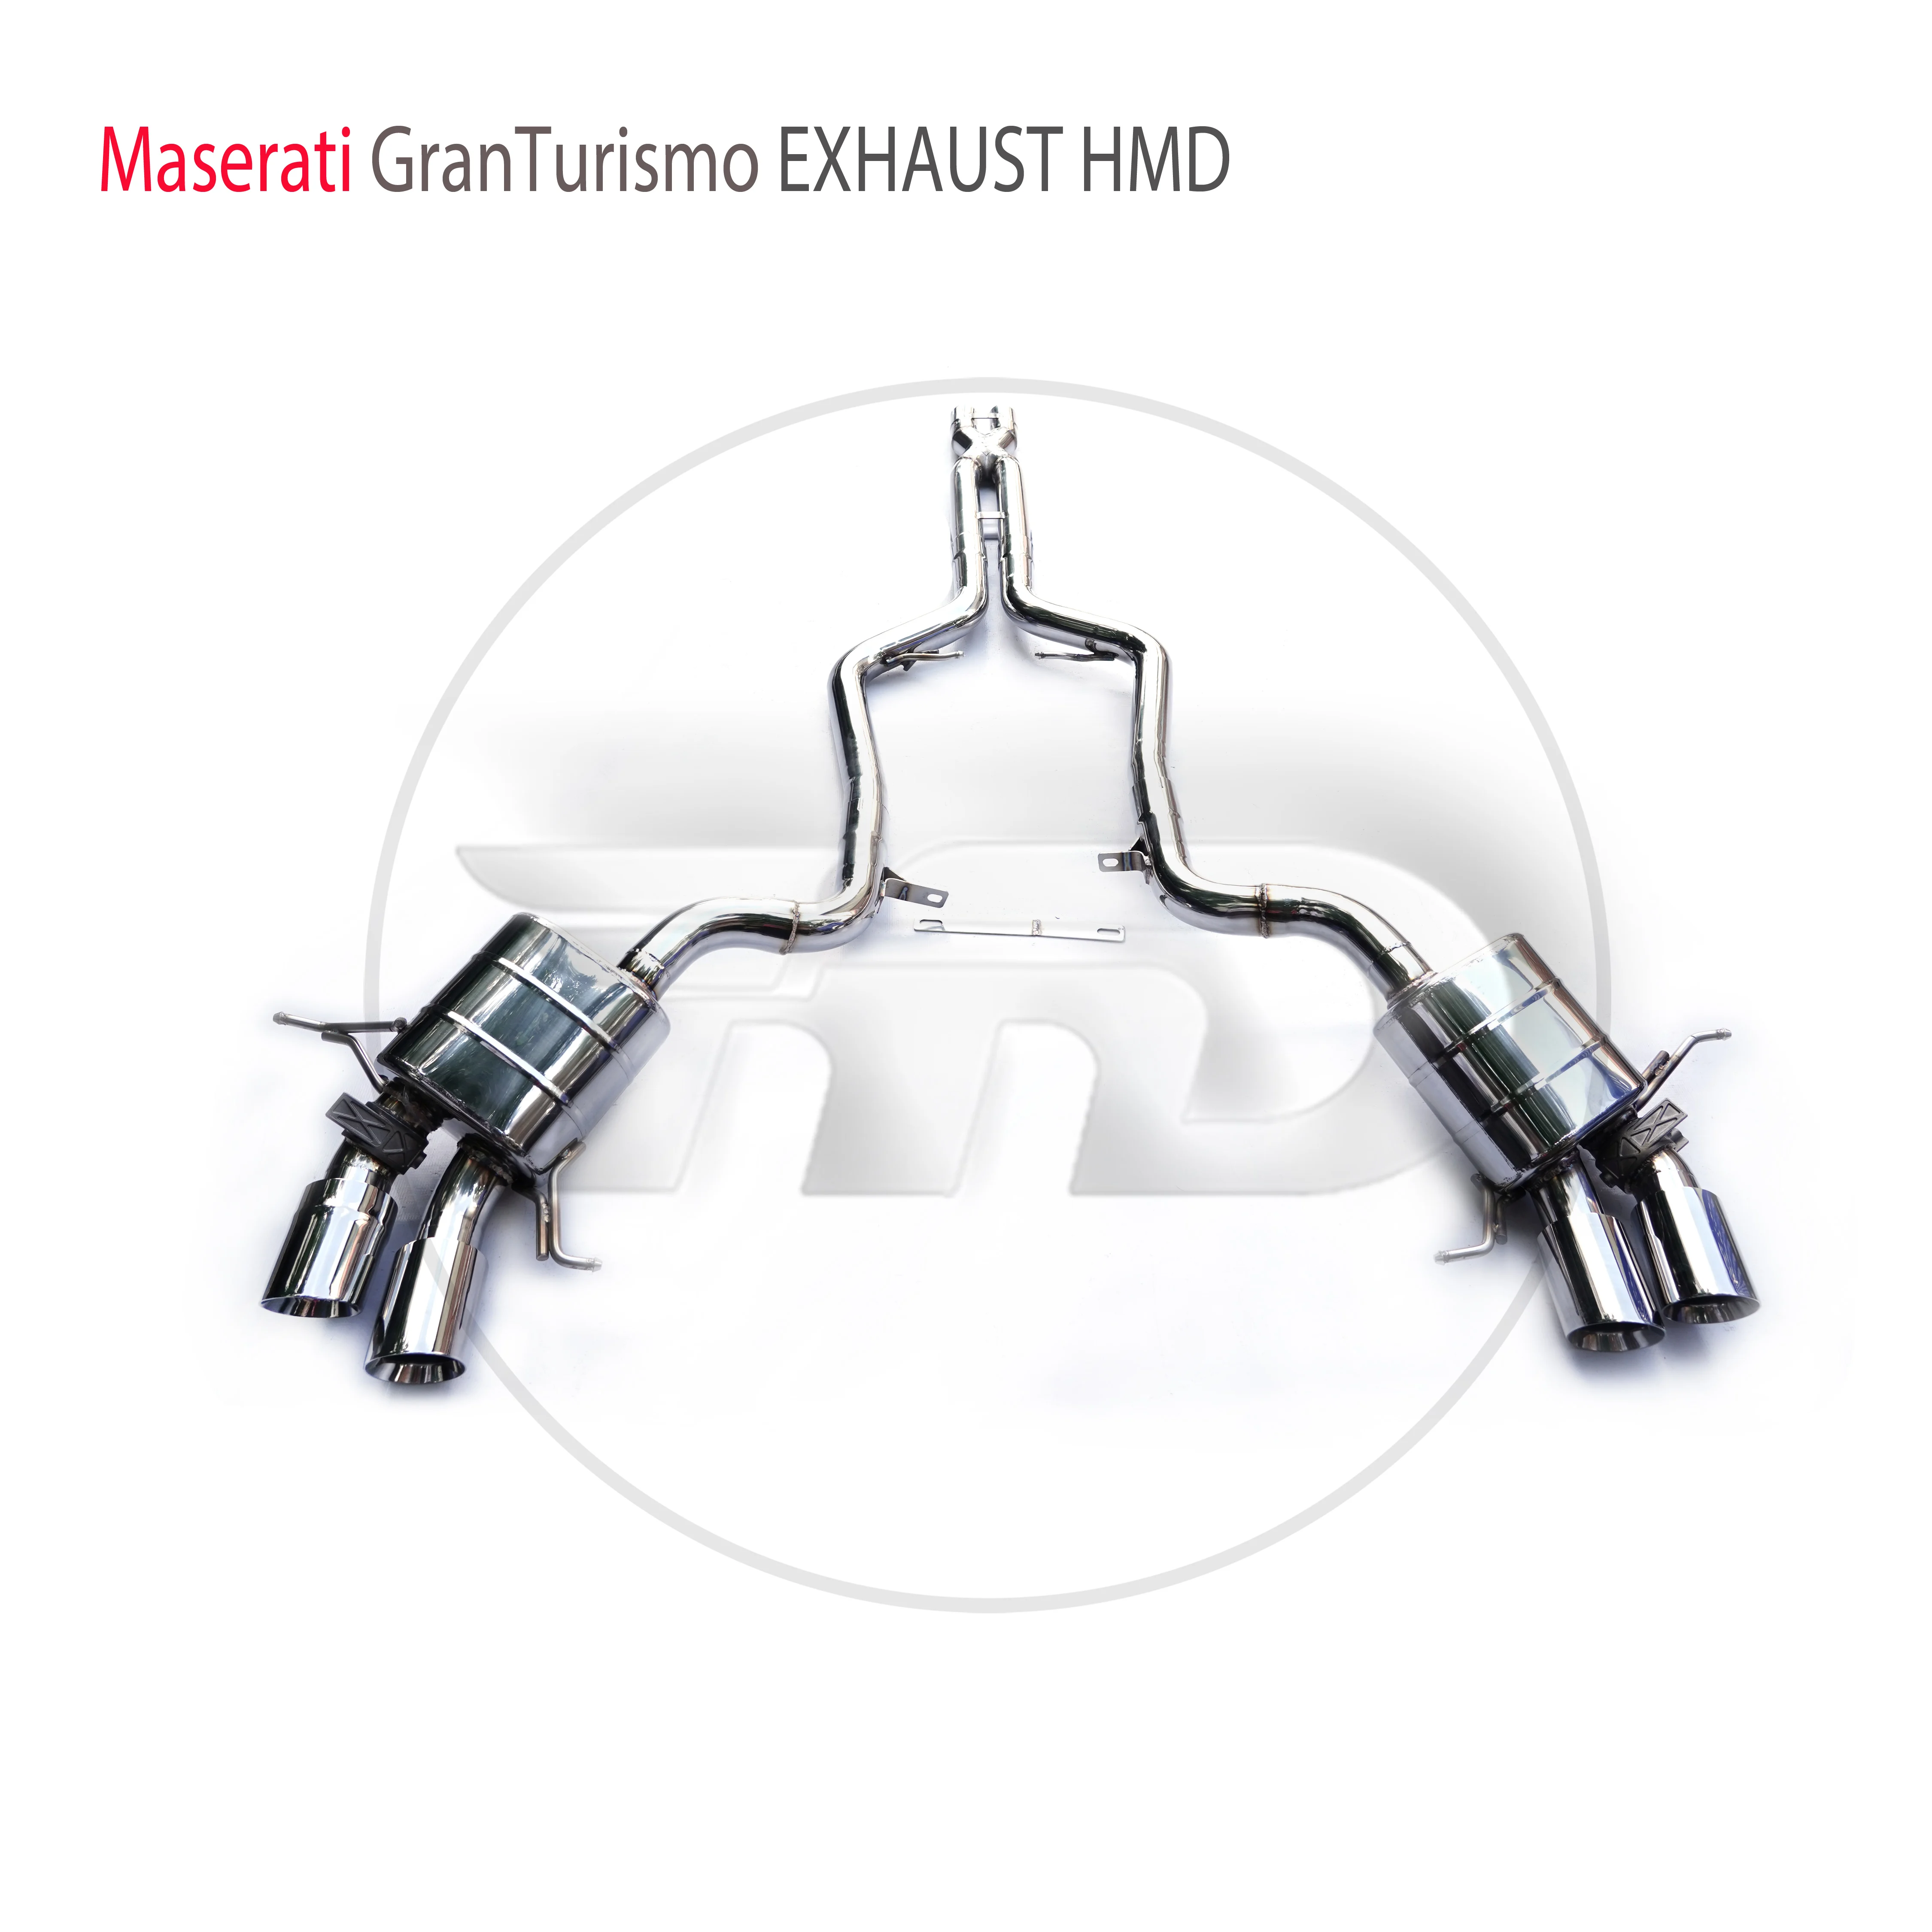 

HMD Stainless Steel Exhaust System Performance Catback for Maserati GranTurismo 4.2L 4.7L Valve Muffler